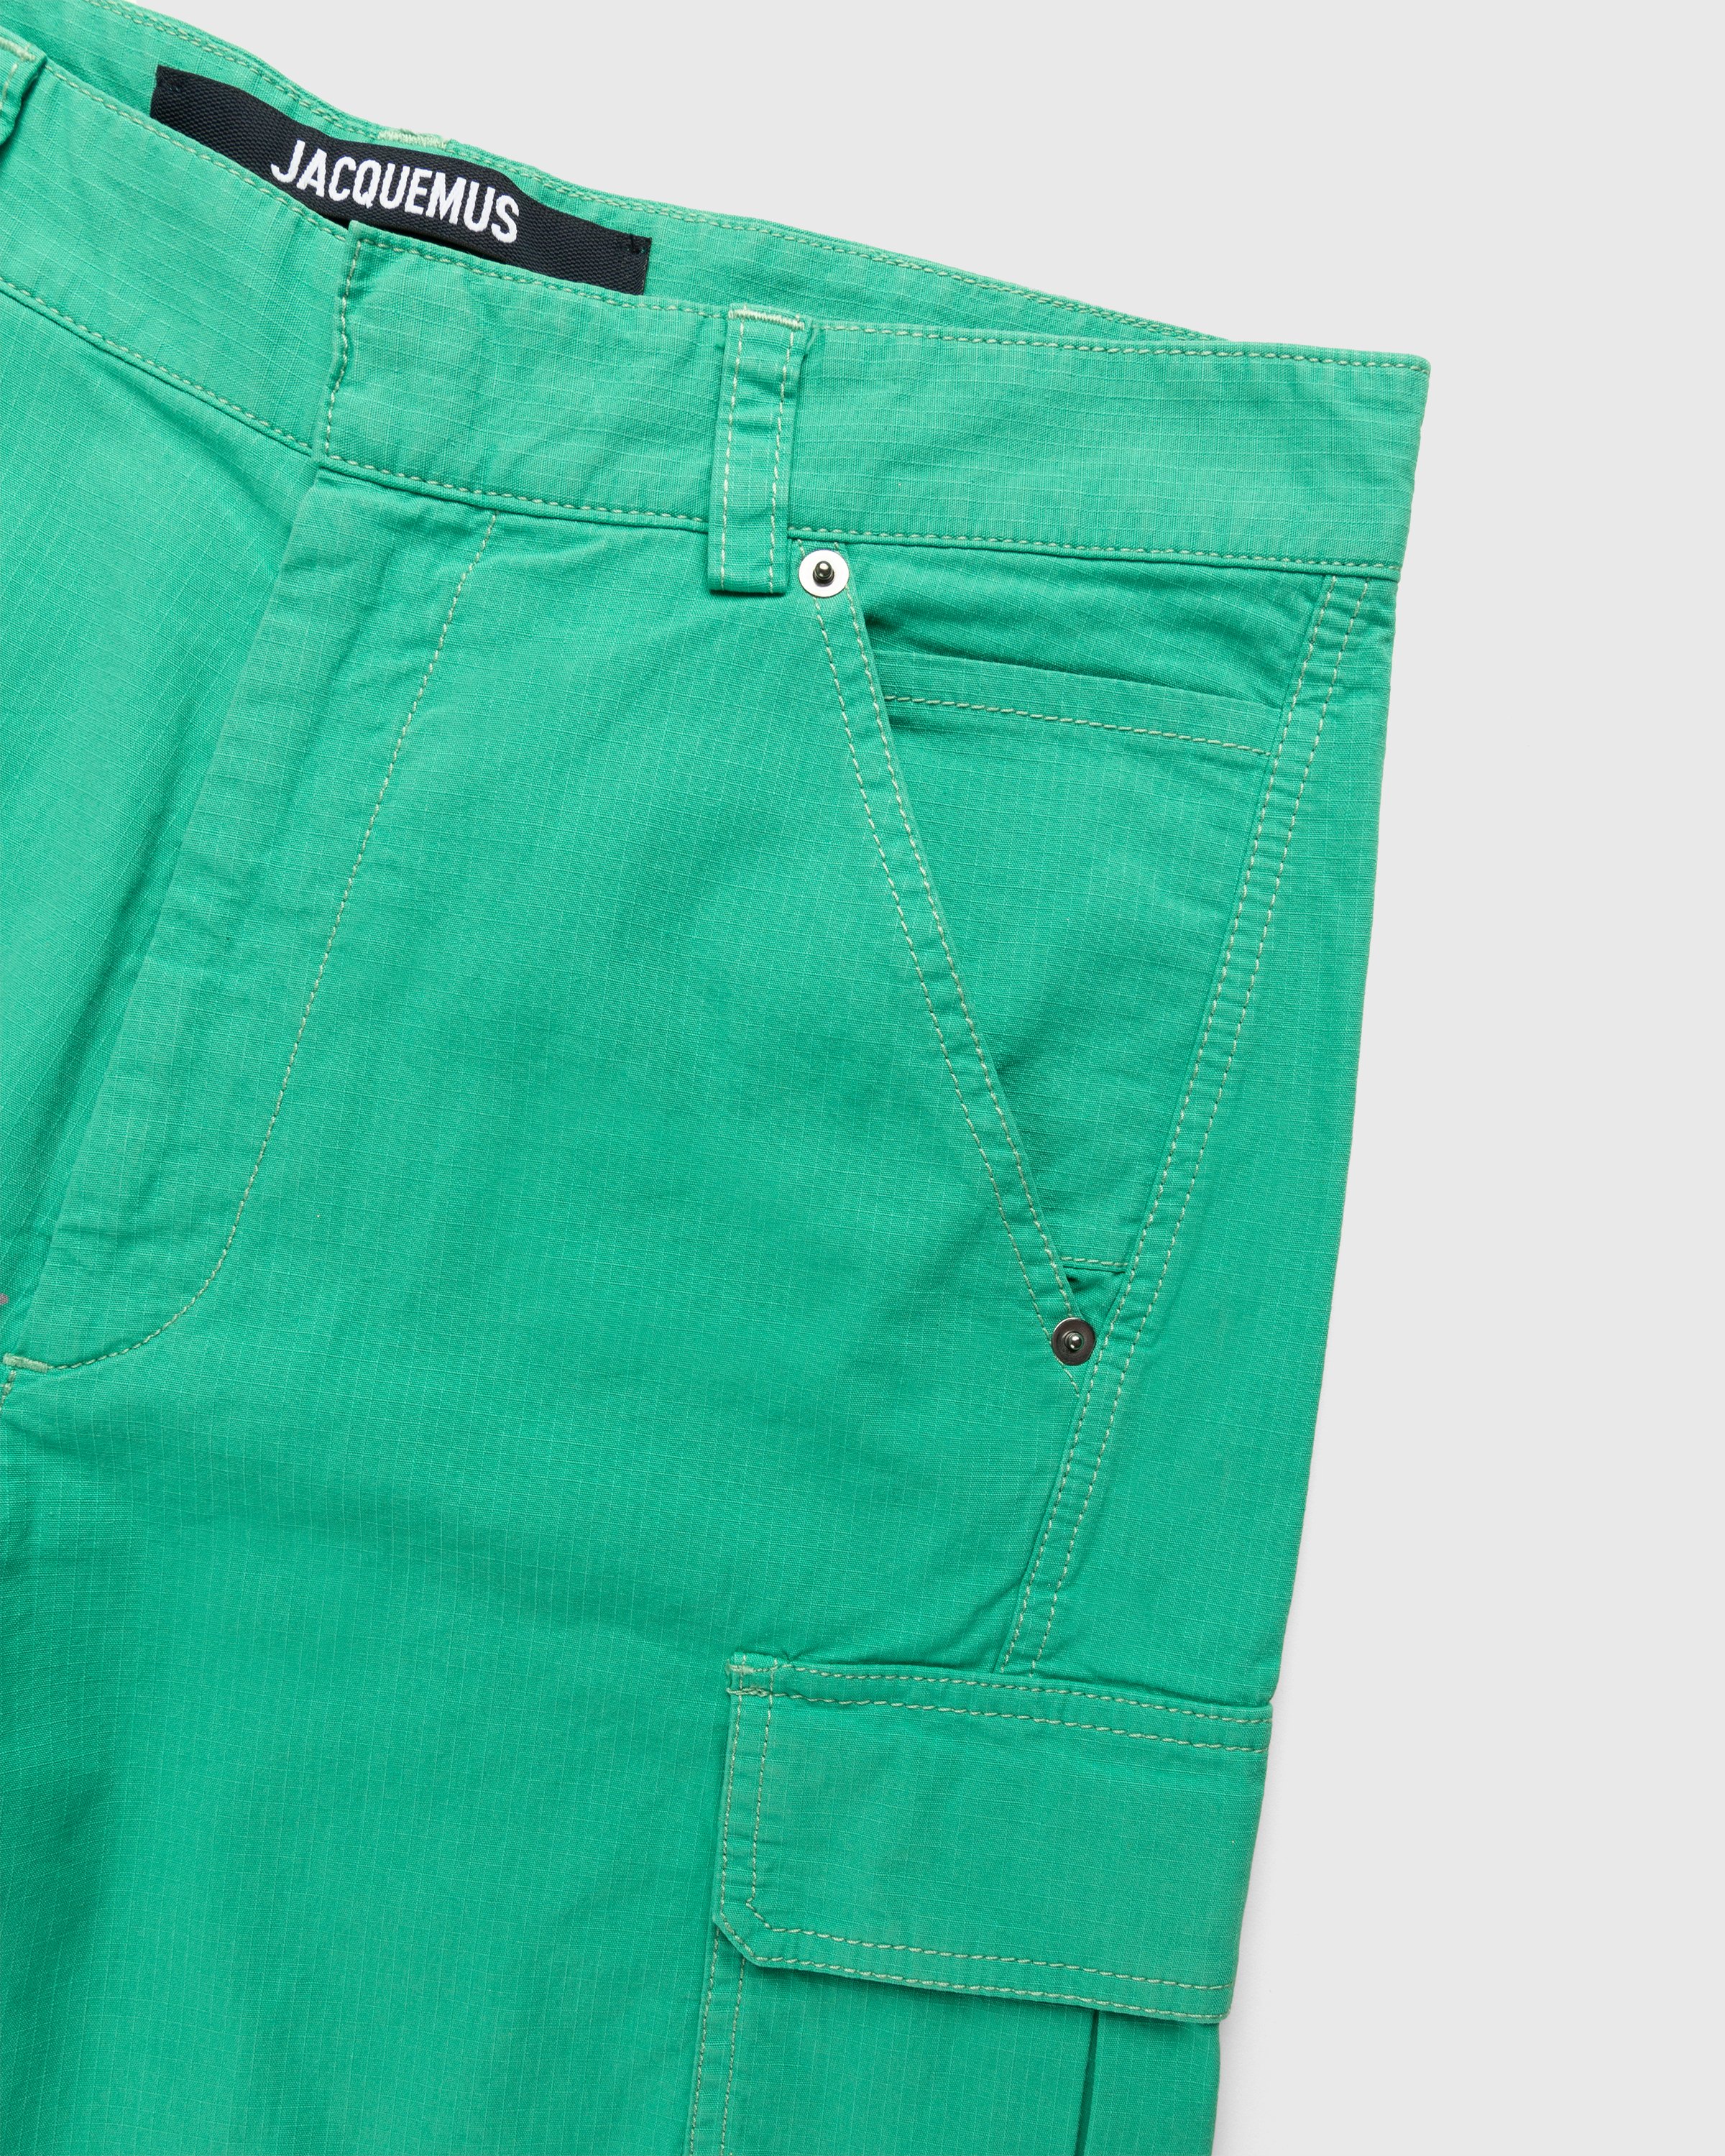 JACQUEMUS - Le Pantalon Peche Green - Clothing - Green - Image 4